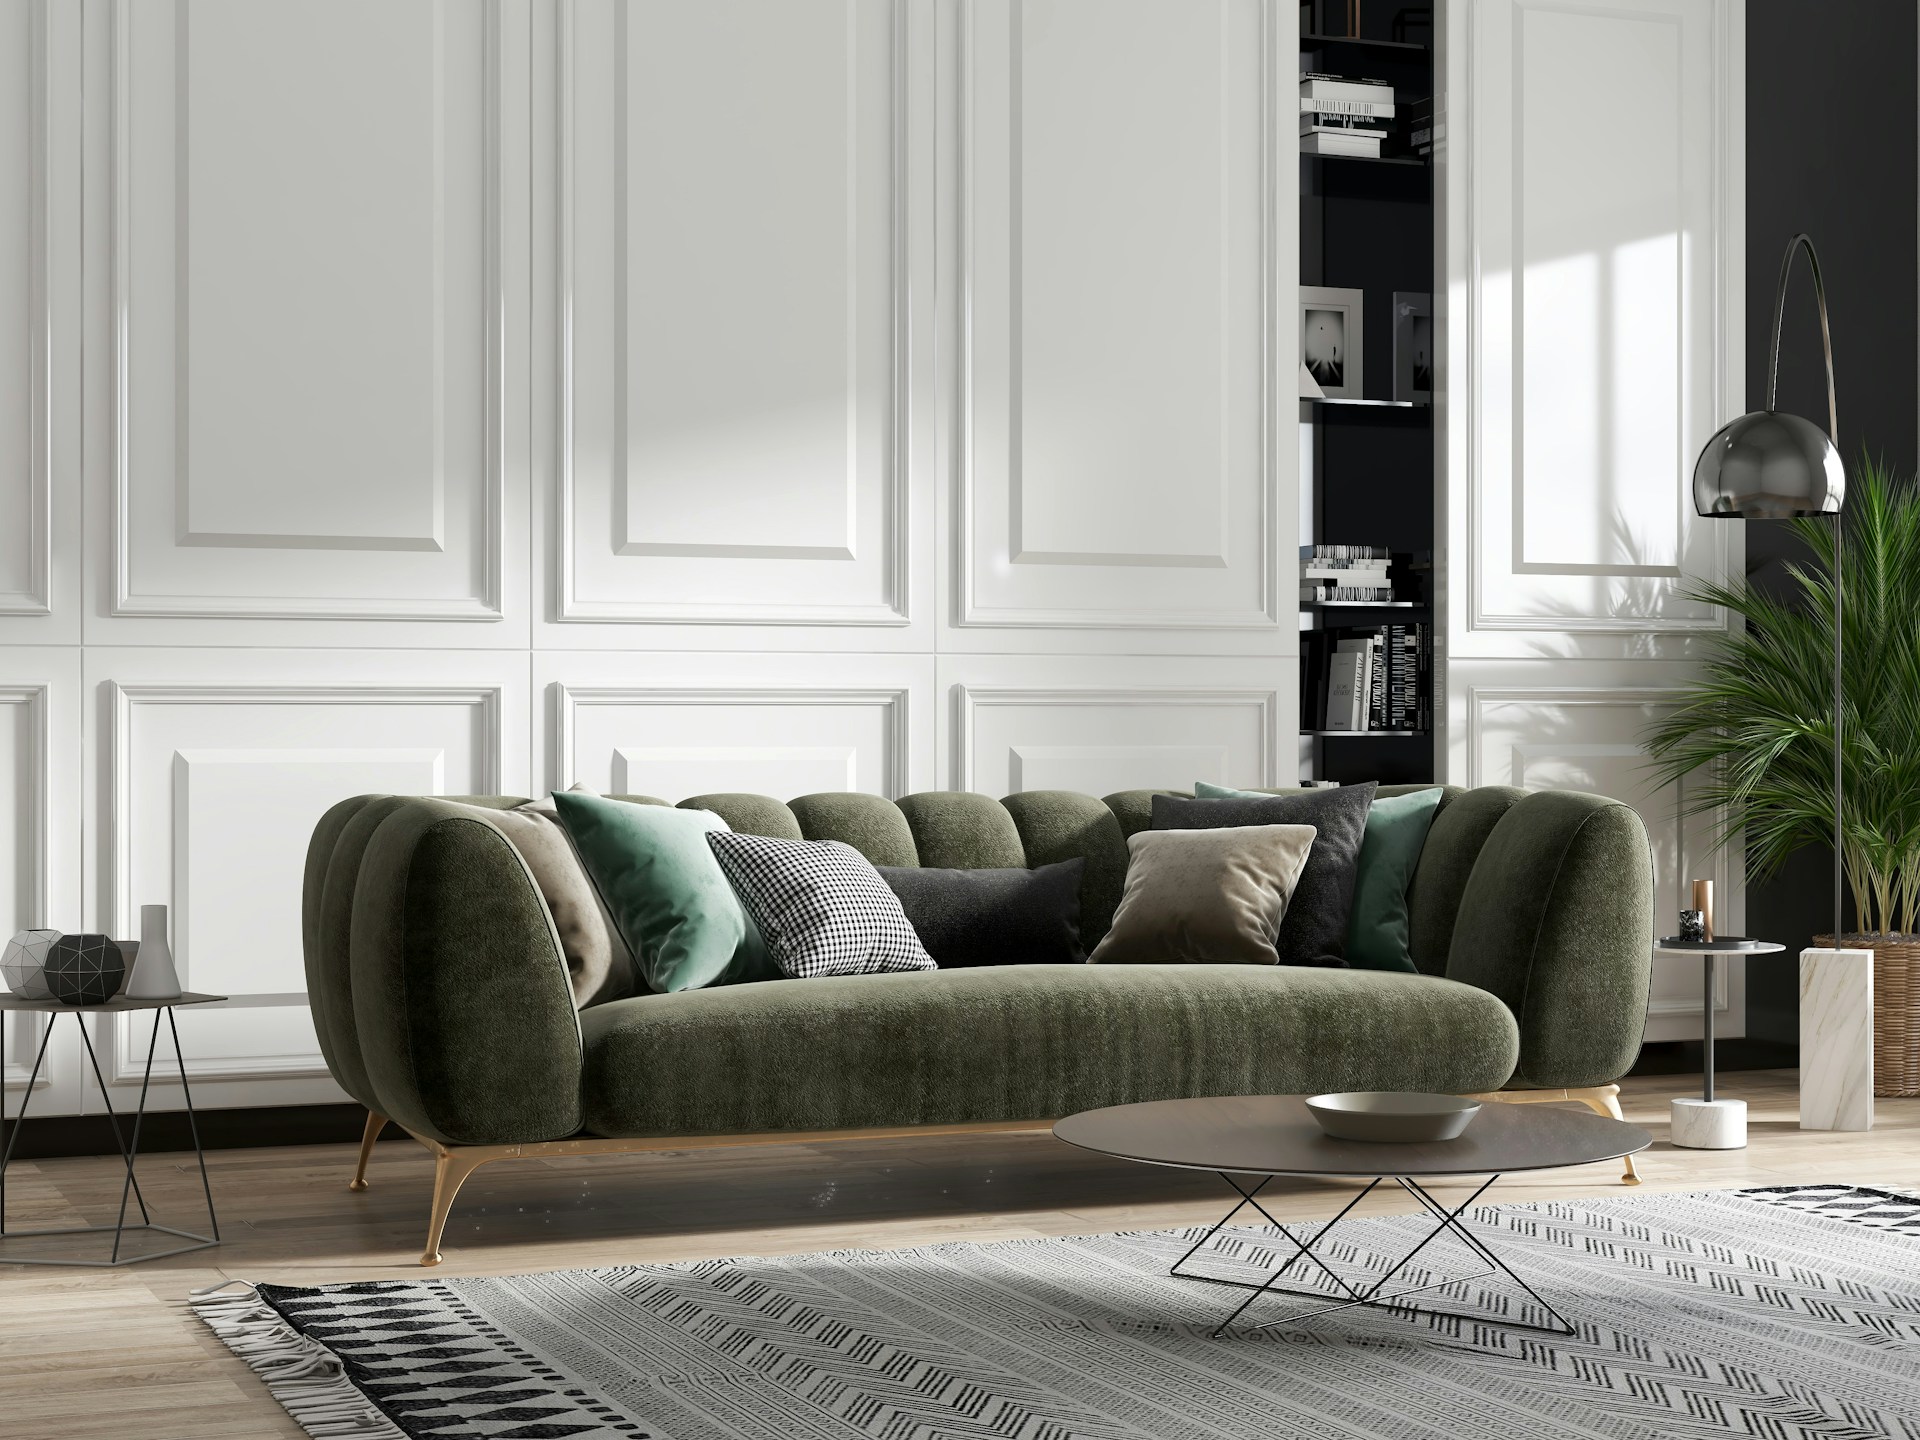 livingroom with modern furniture. Image by Unsplash